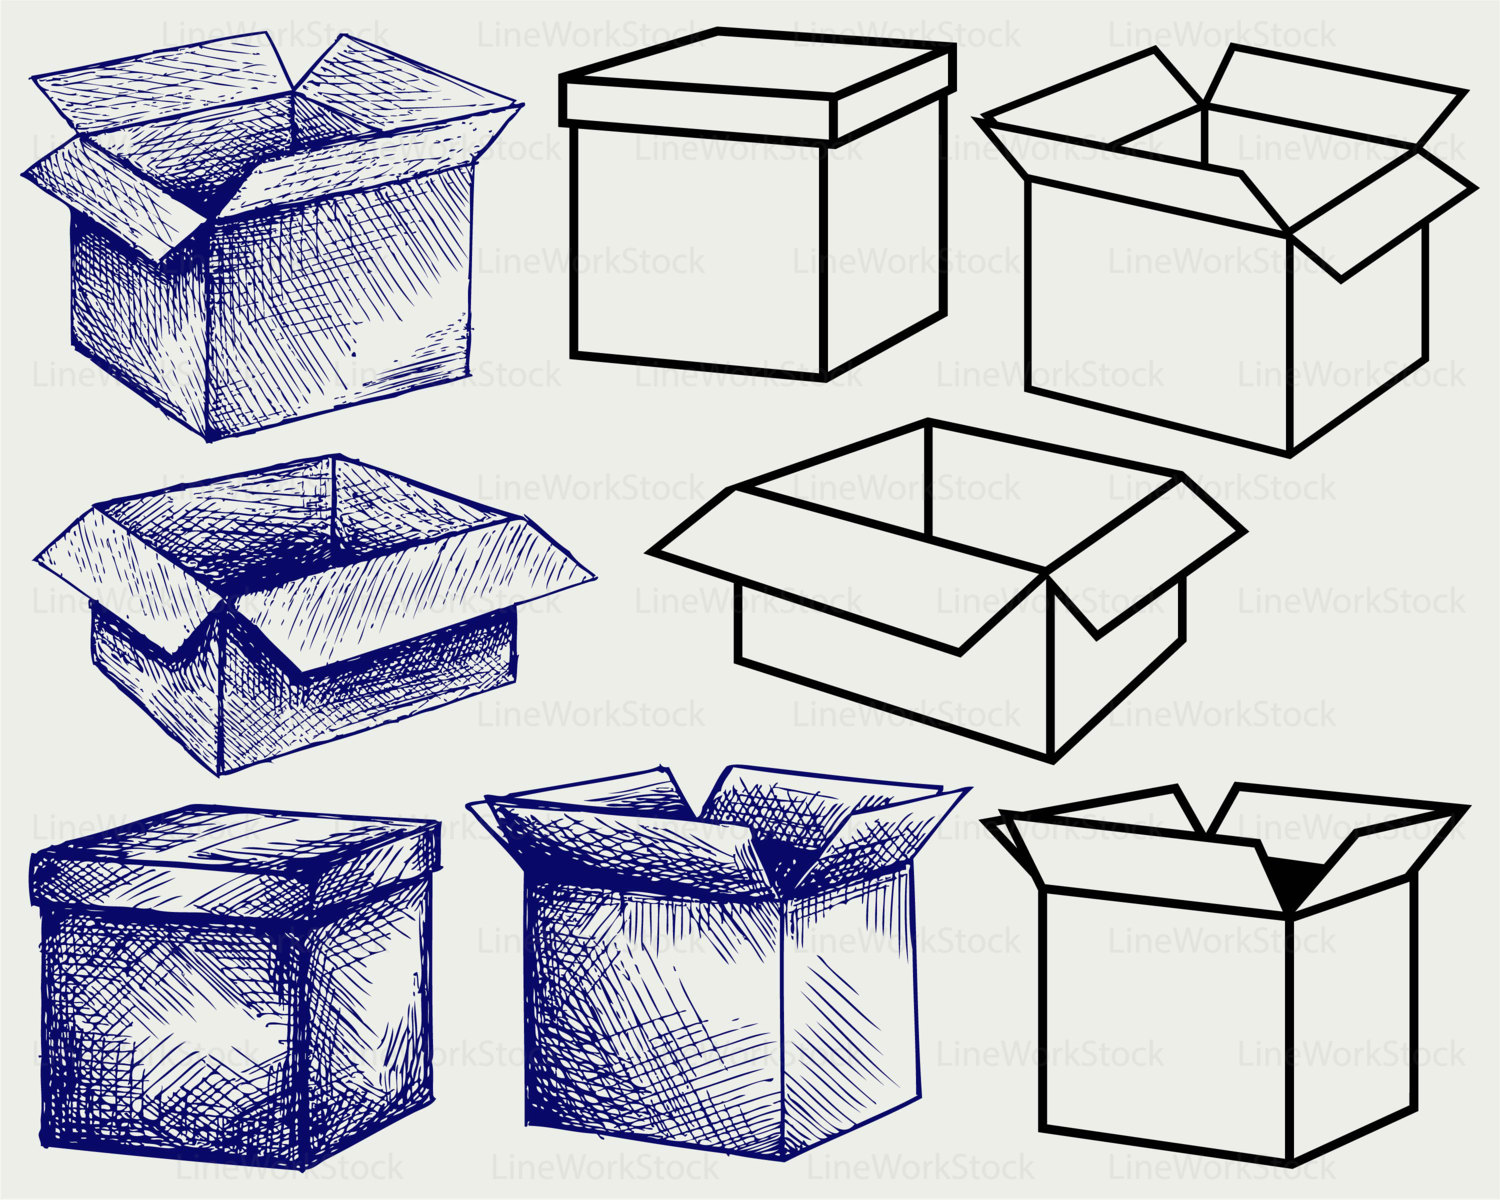 cardboard box clip art